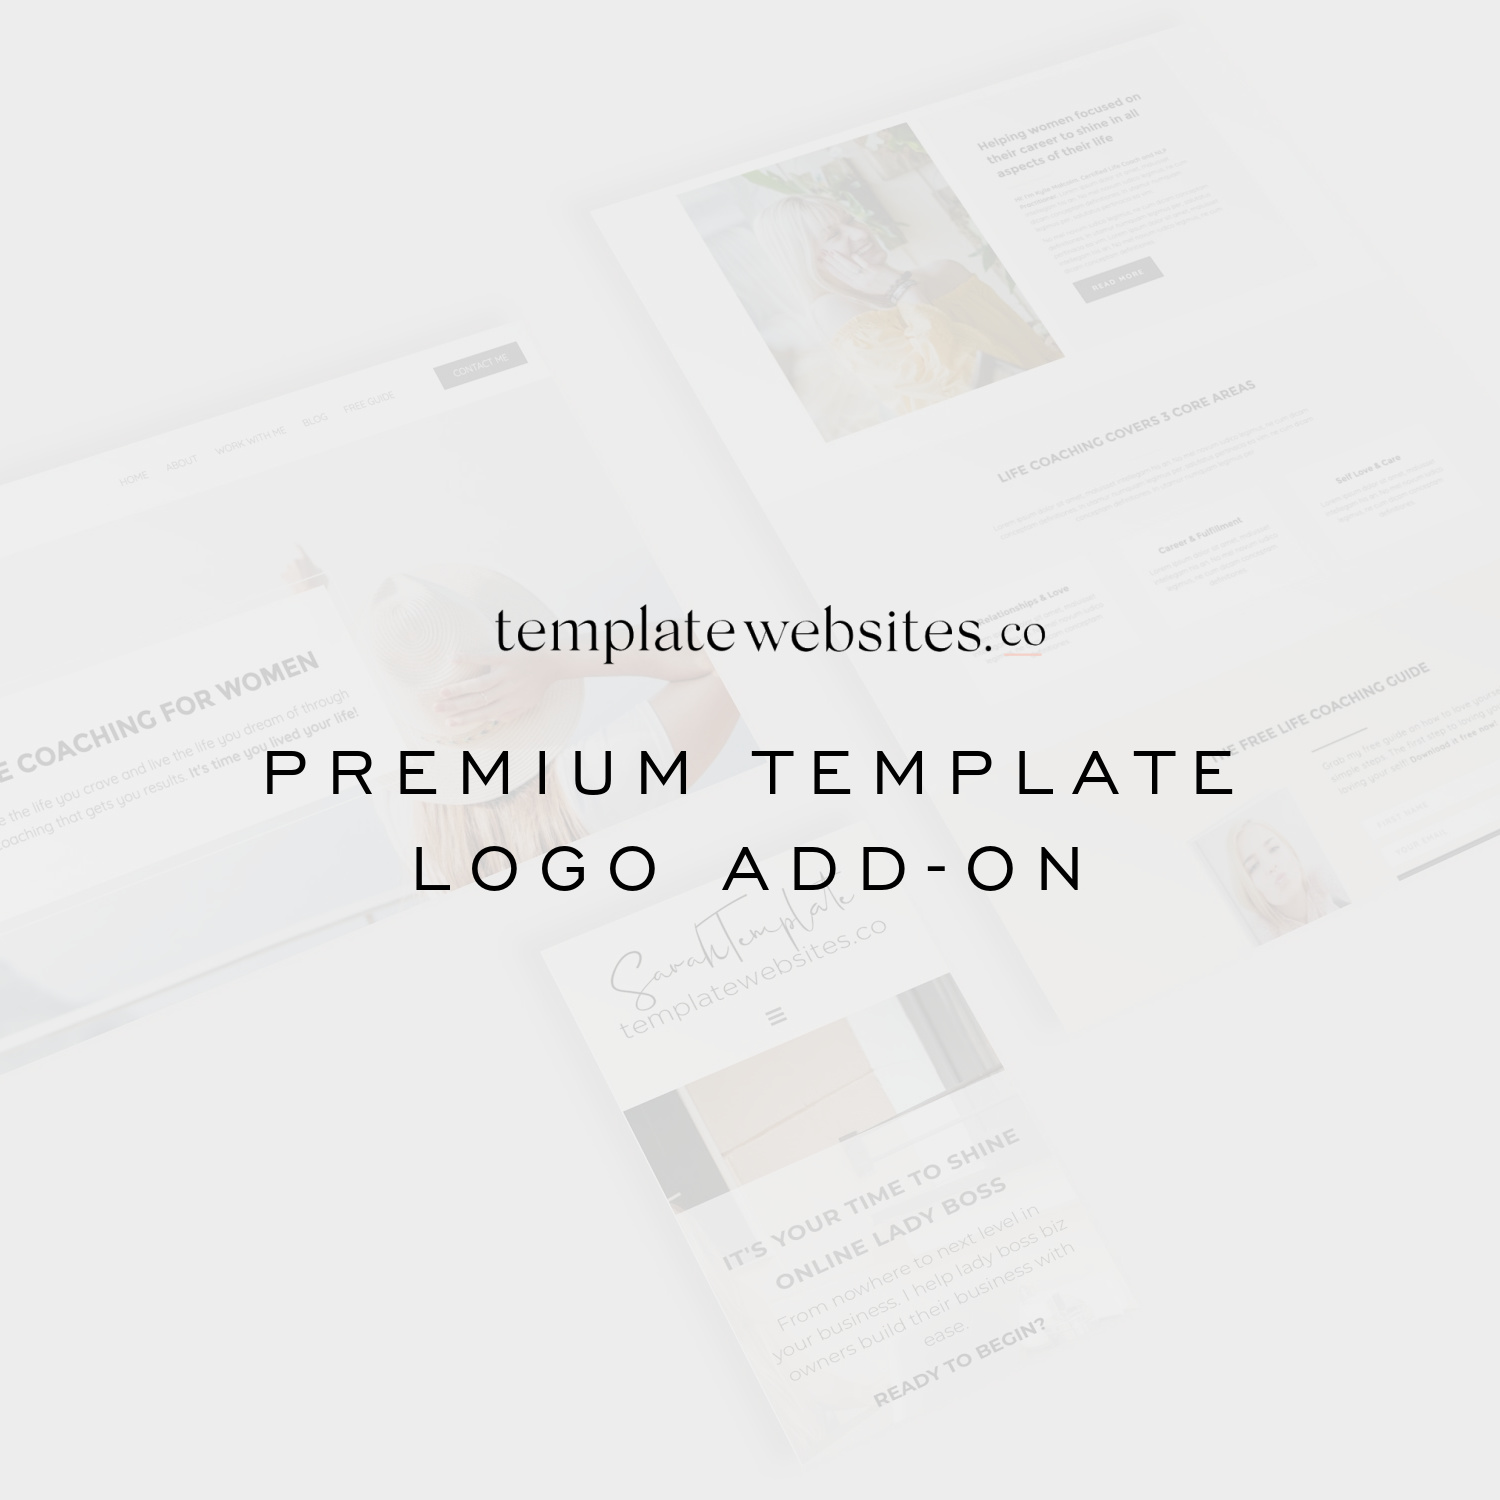 Add-On: Premium Template Logo